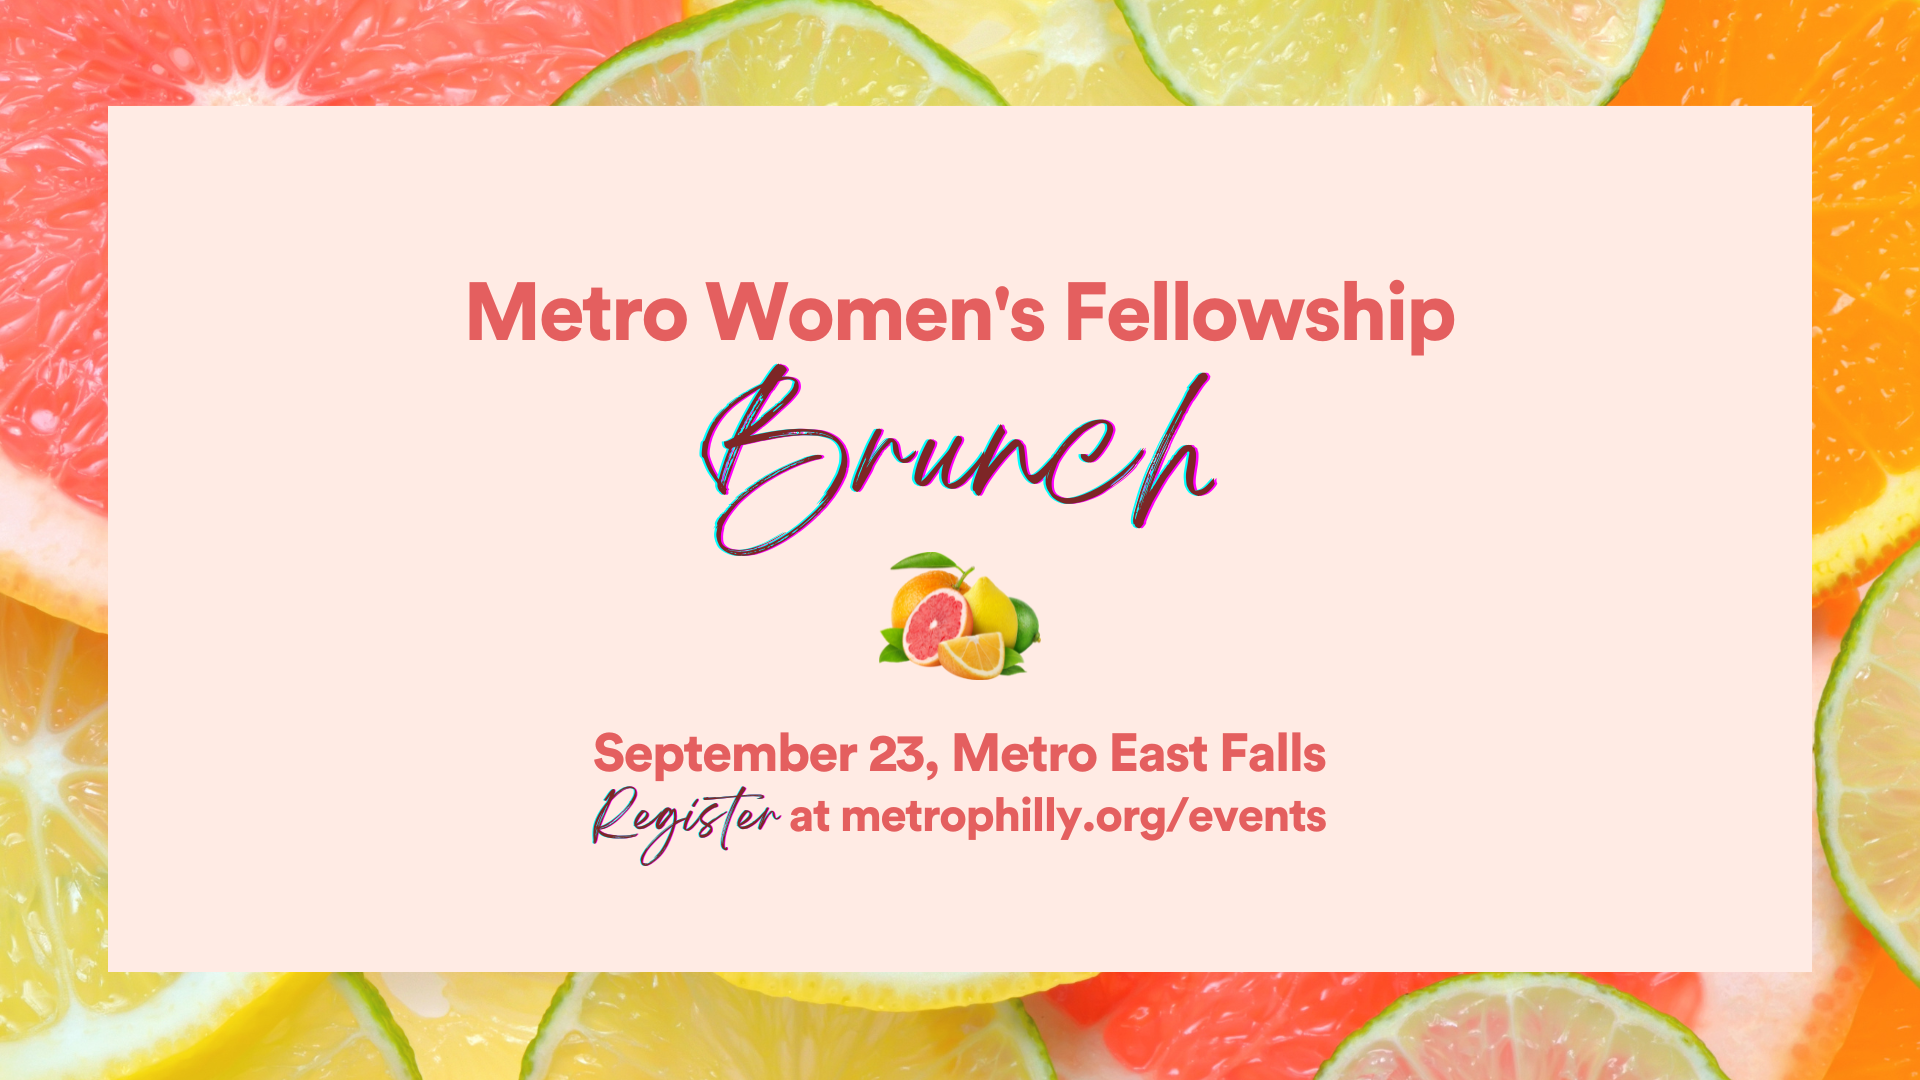 Metro Women's Fellowship East Falls Brunch